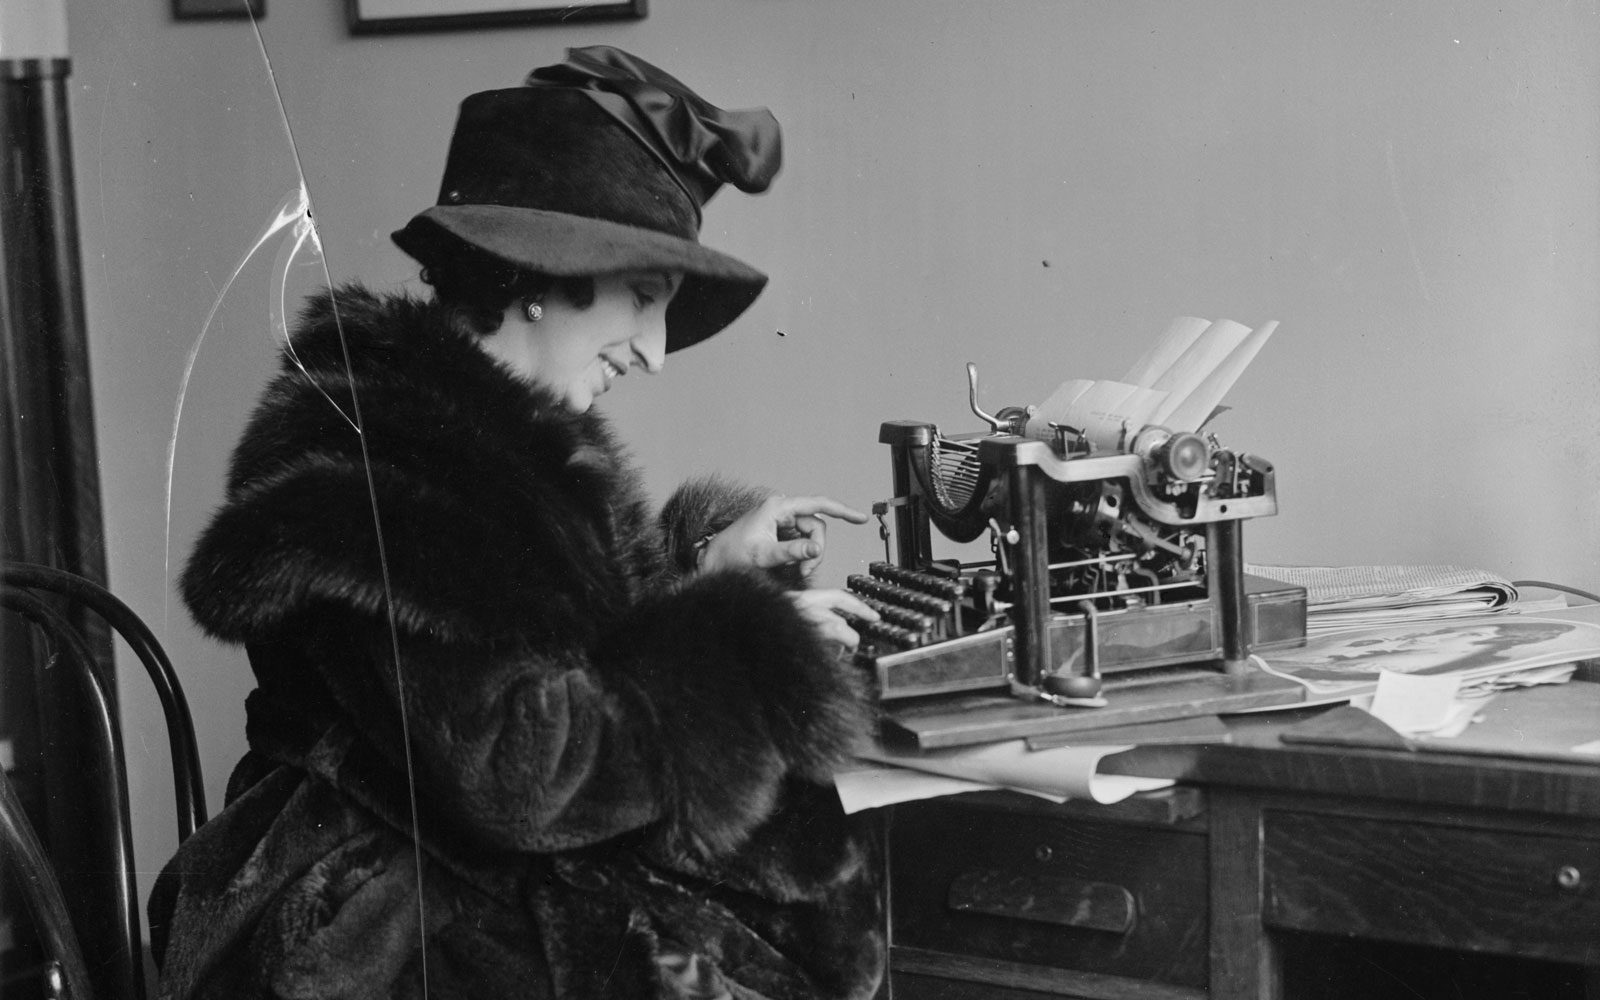 Amelita Galli-Curci seated at desk using typewritter, c. 1920